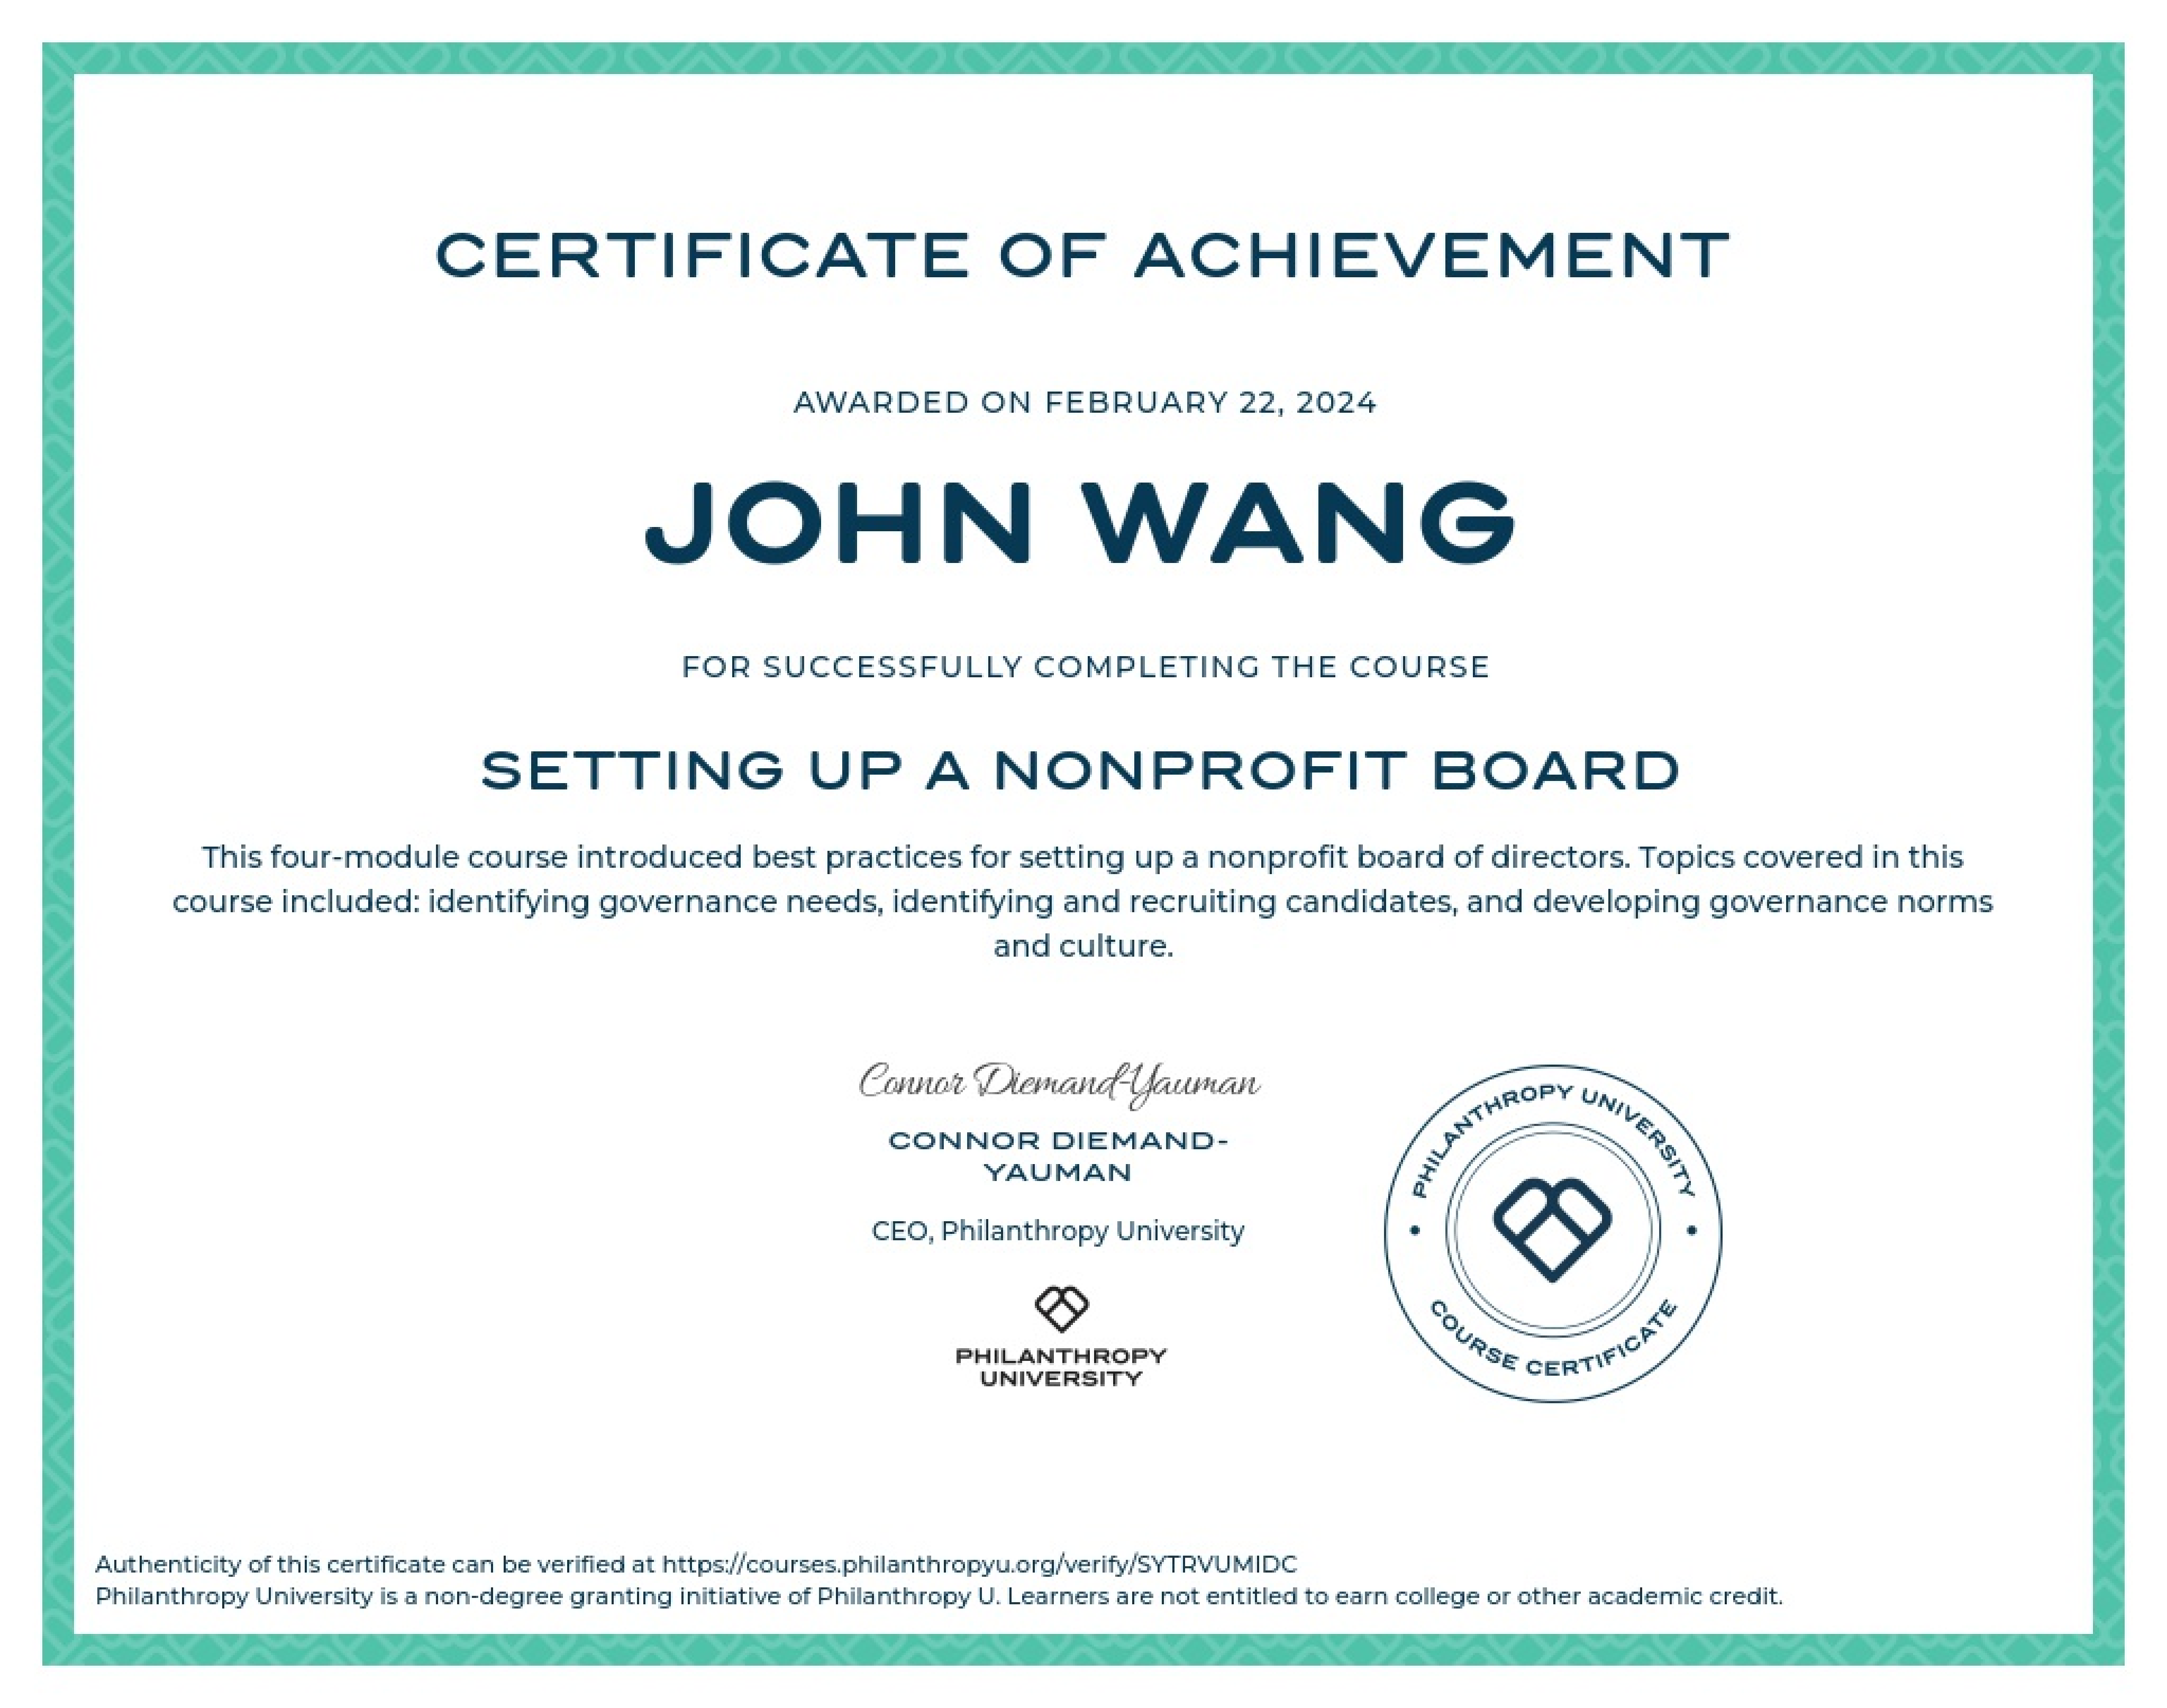 John's Setting Up a Nonprofit Board from Philanthropy University